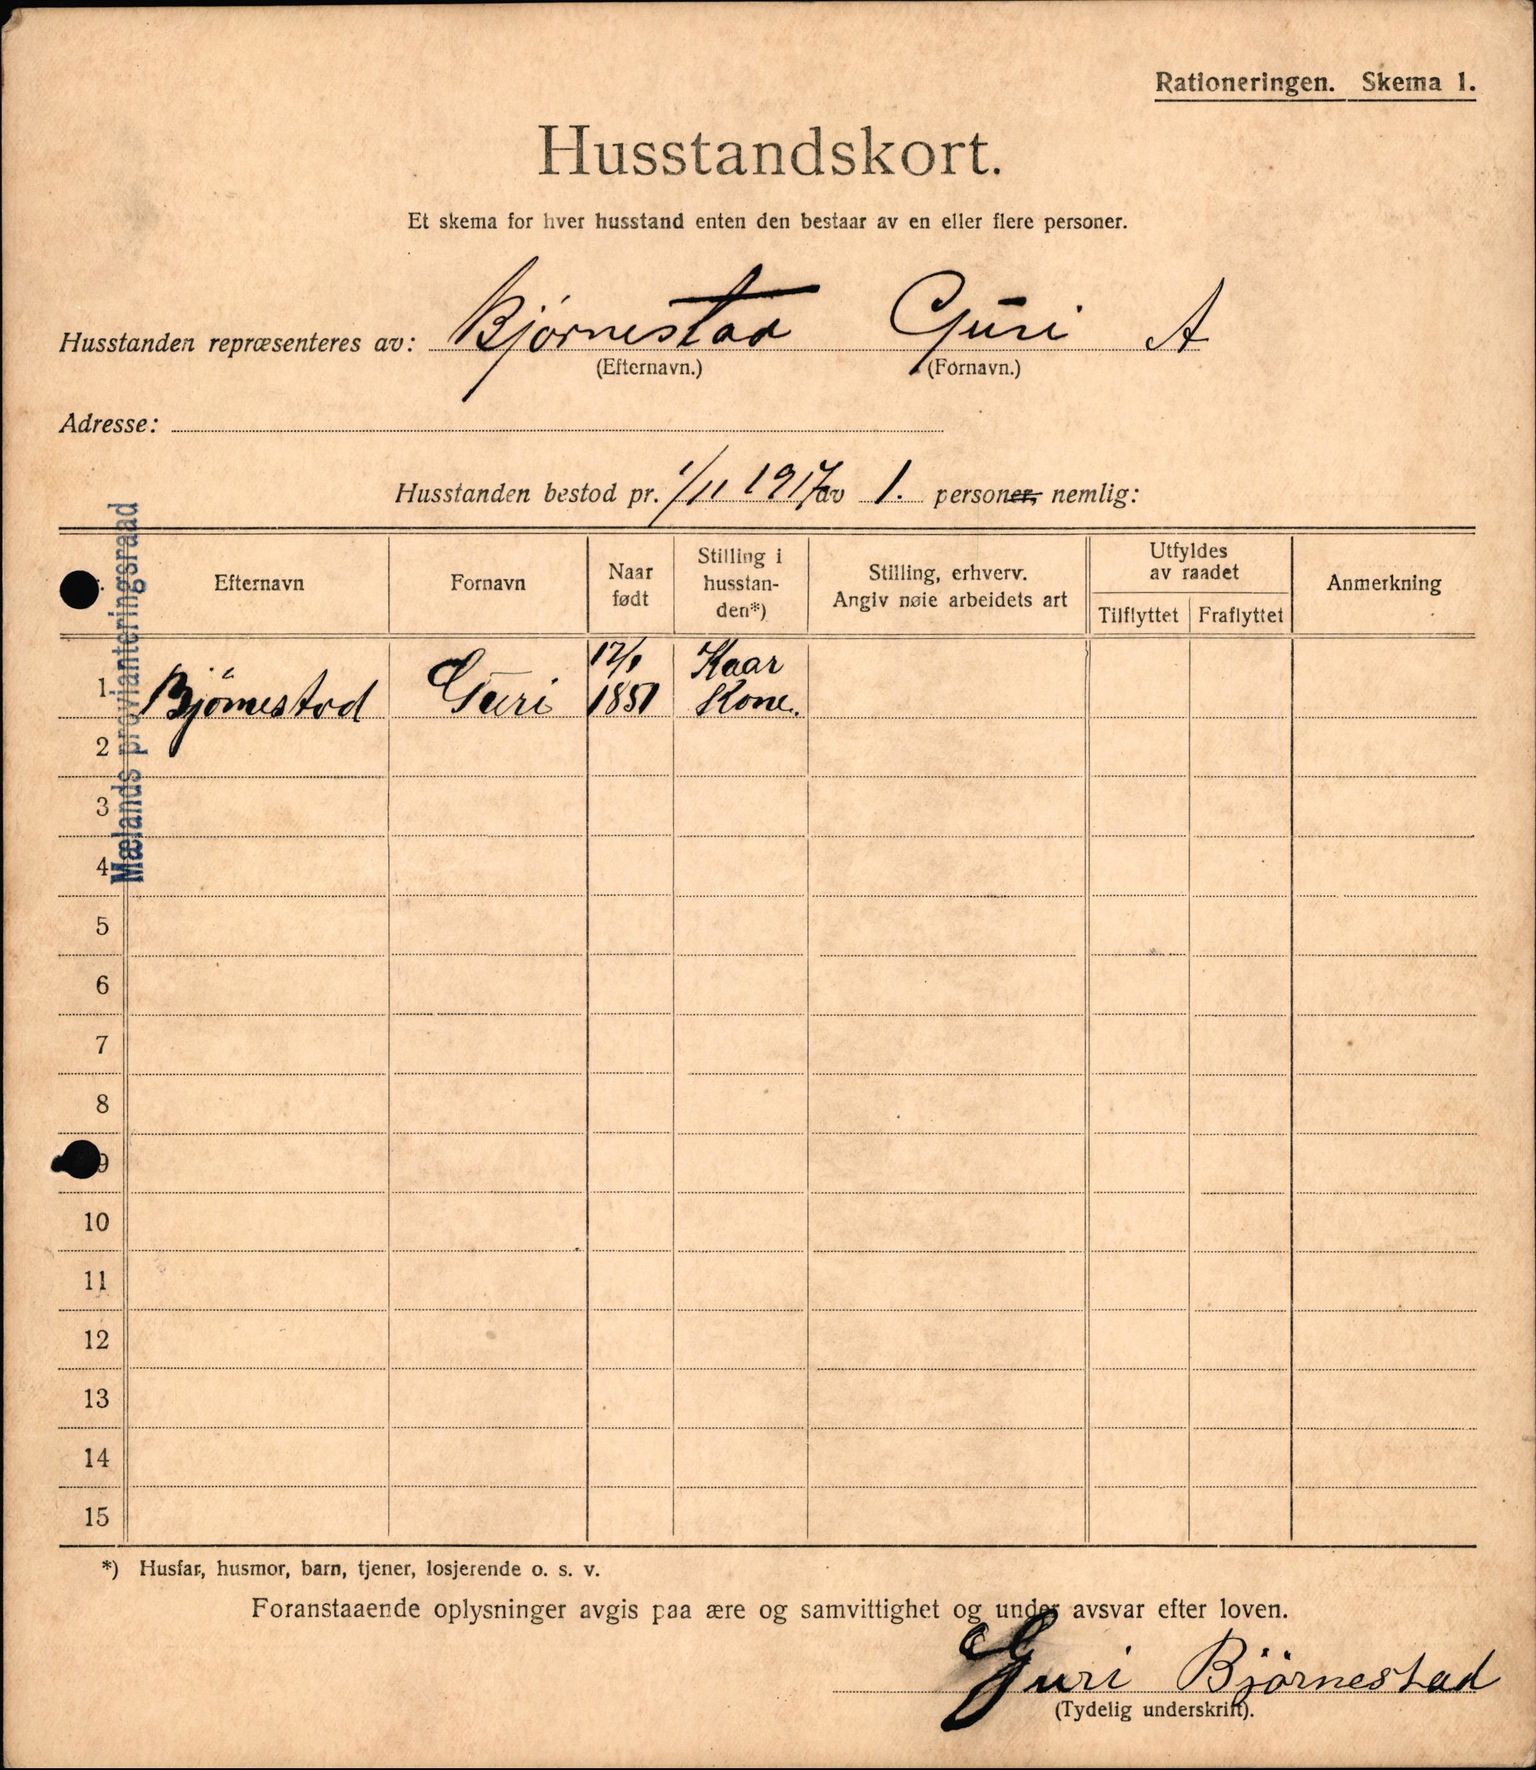 IKAH, Meland kommune, Provianteringsrådet, Husstander per 01.11.1917, 1917-1918, p. 84